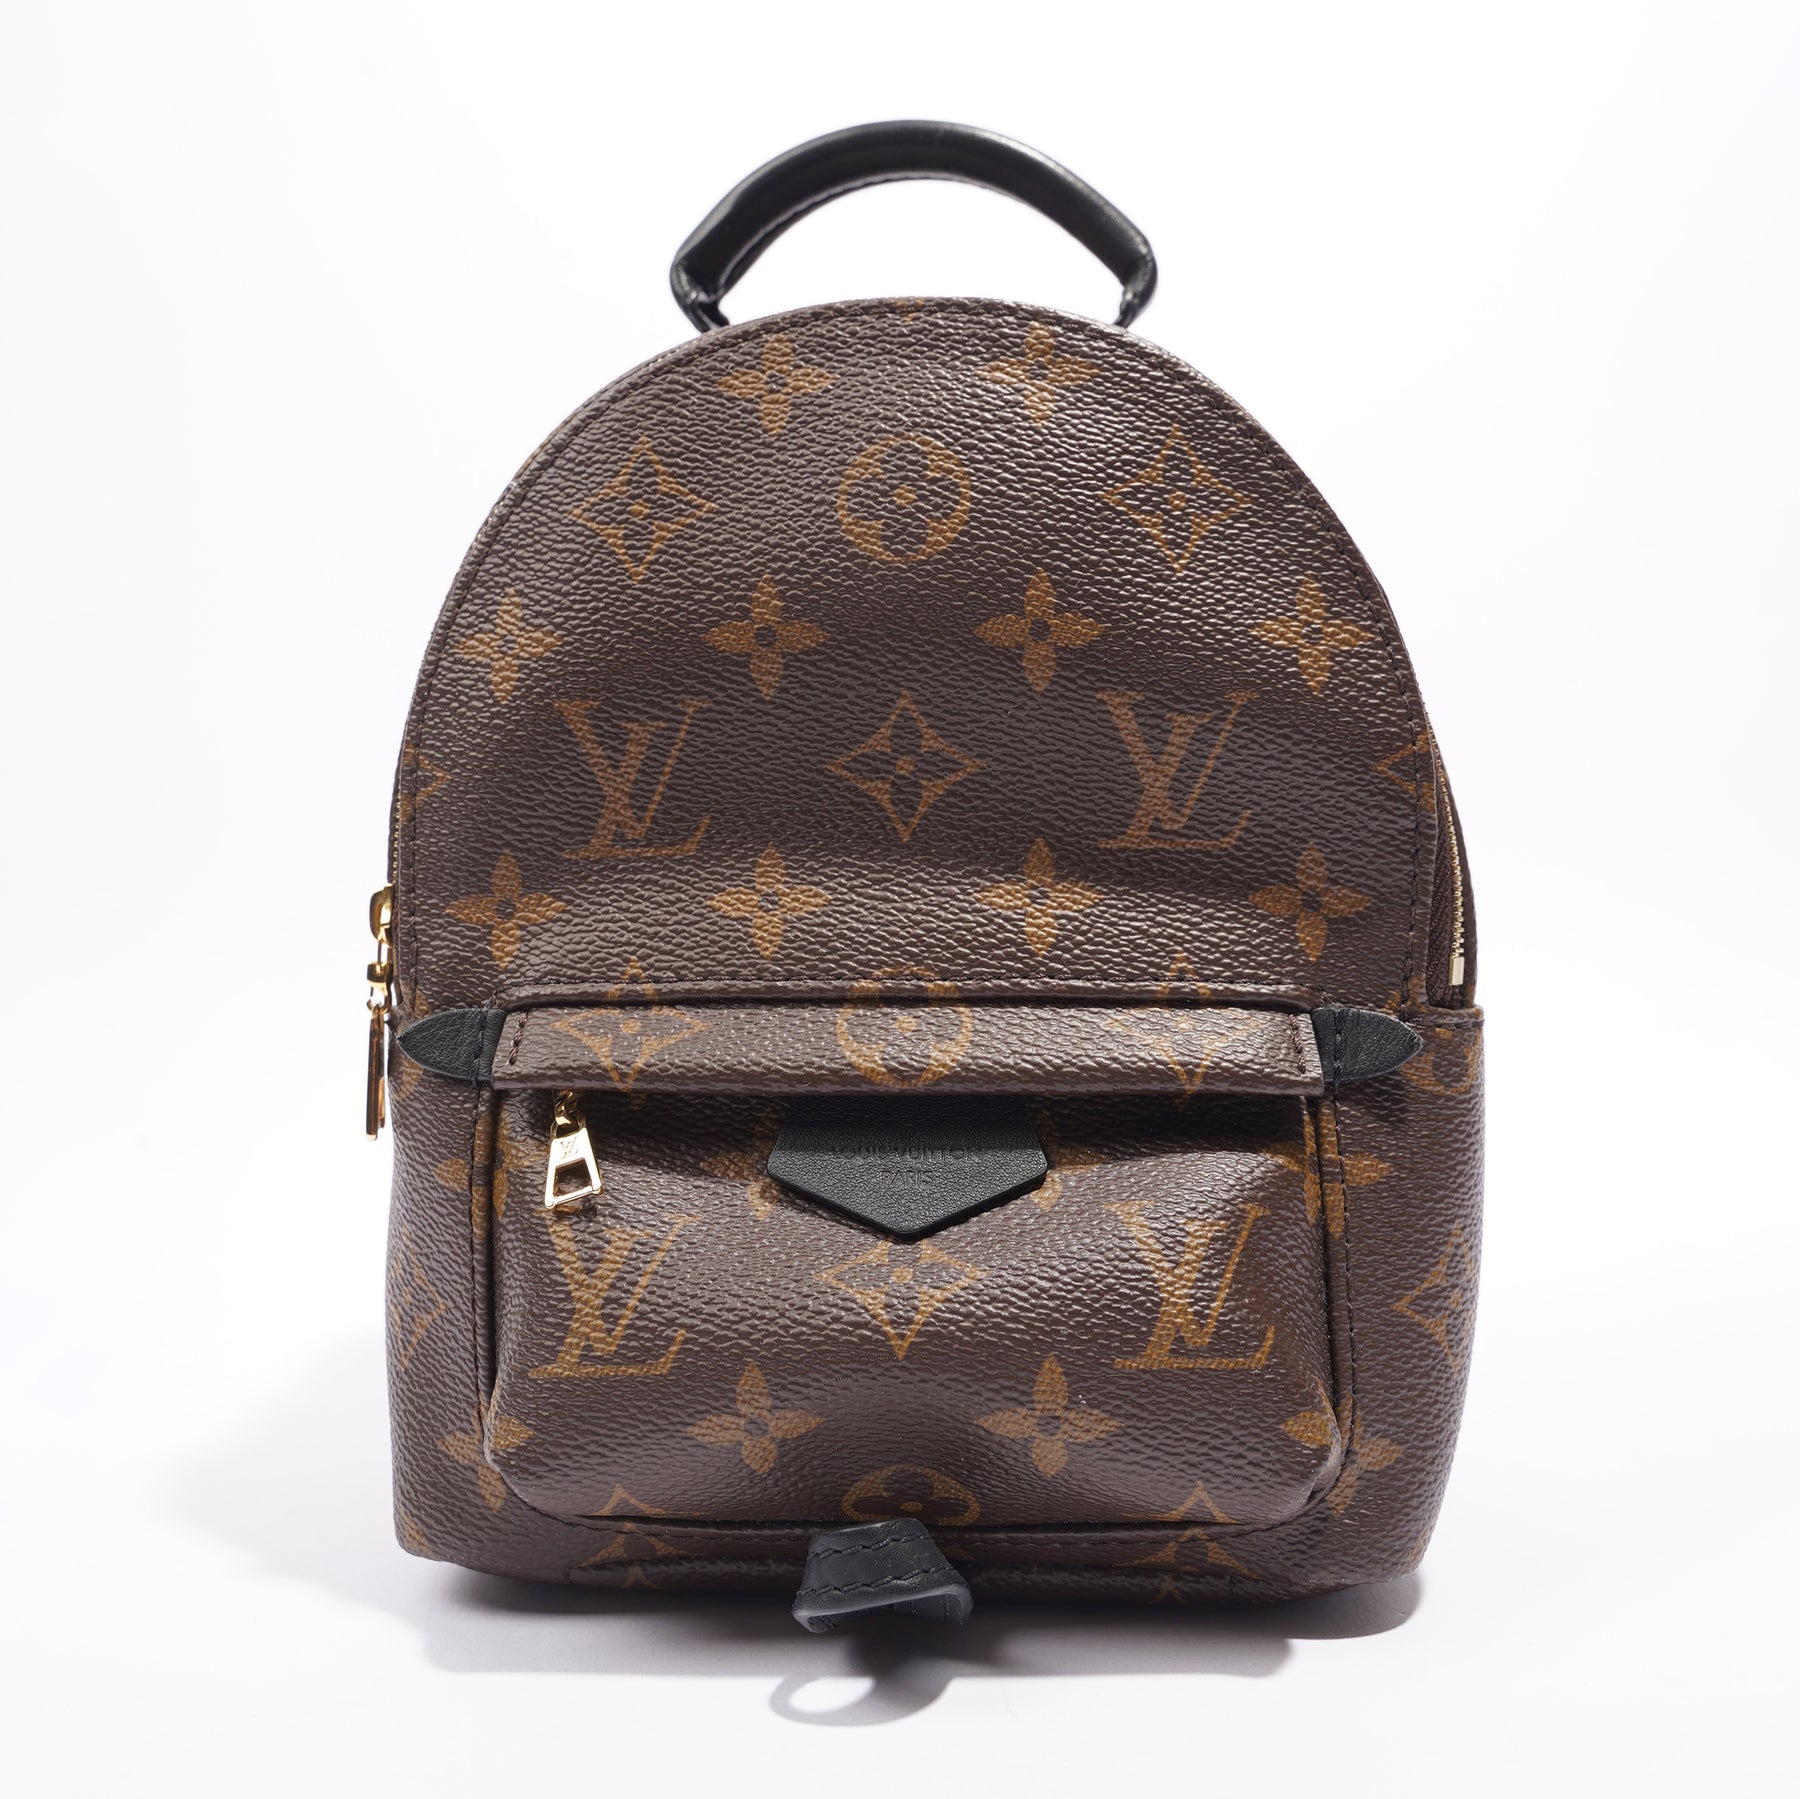 Thoughts on Louis Vuitton Palm Springs Mini? : r/handbags